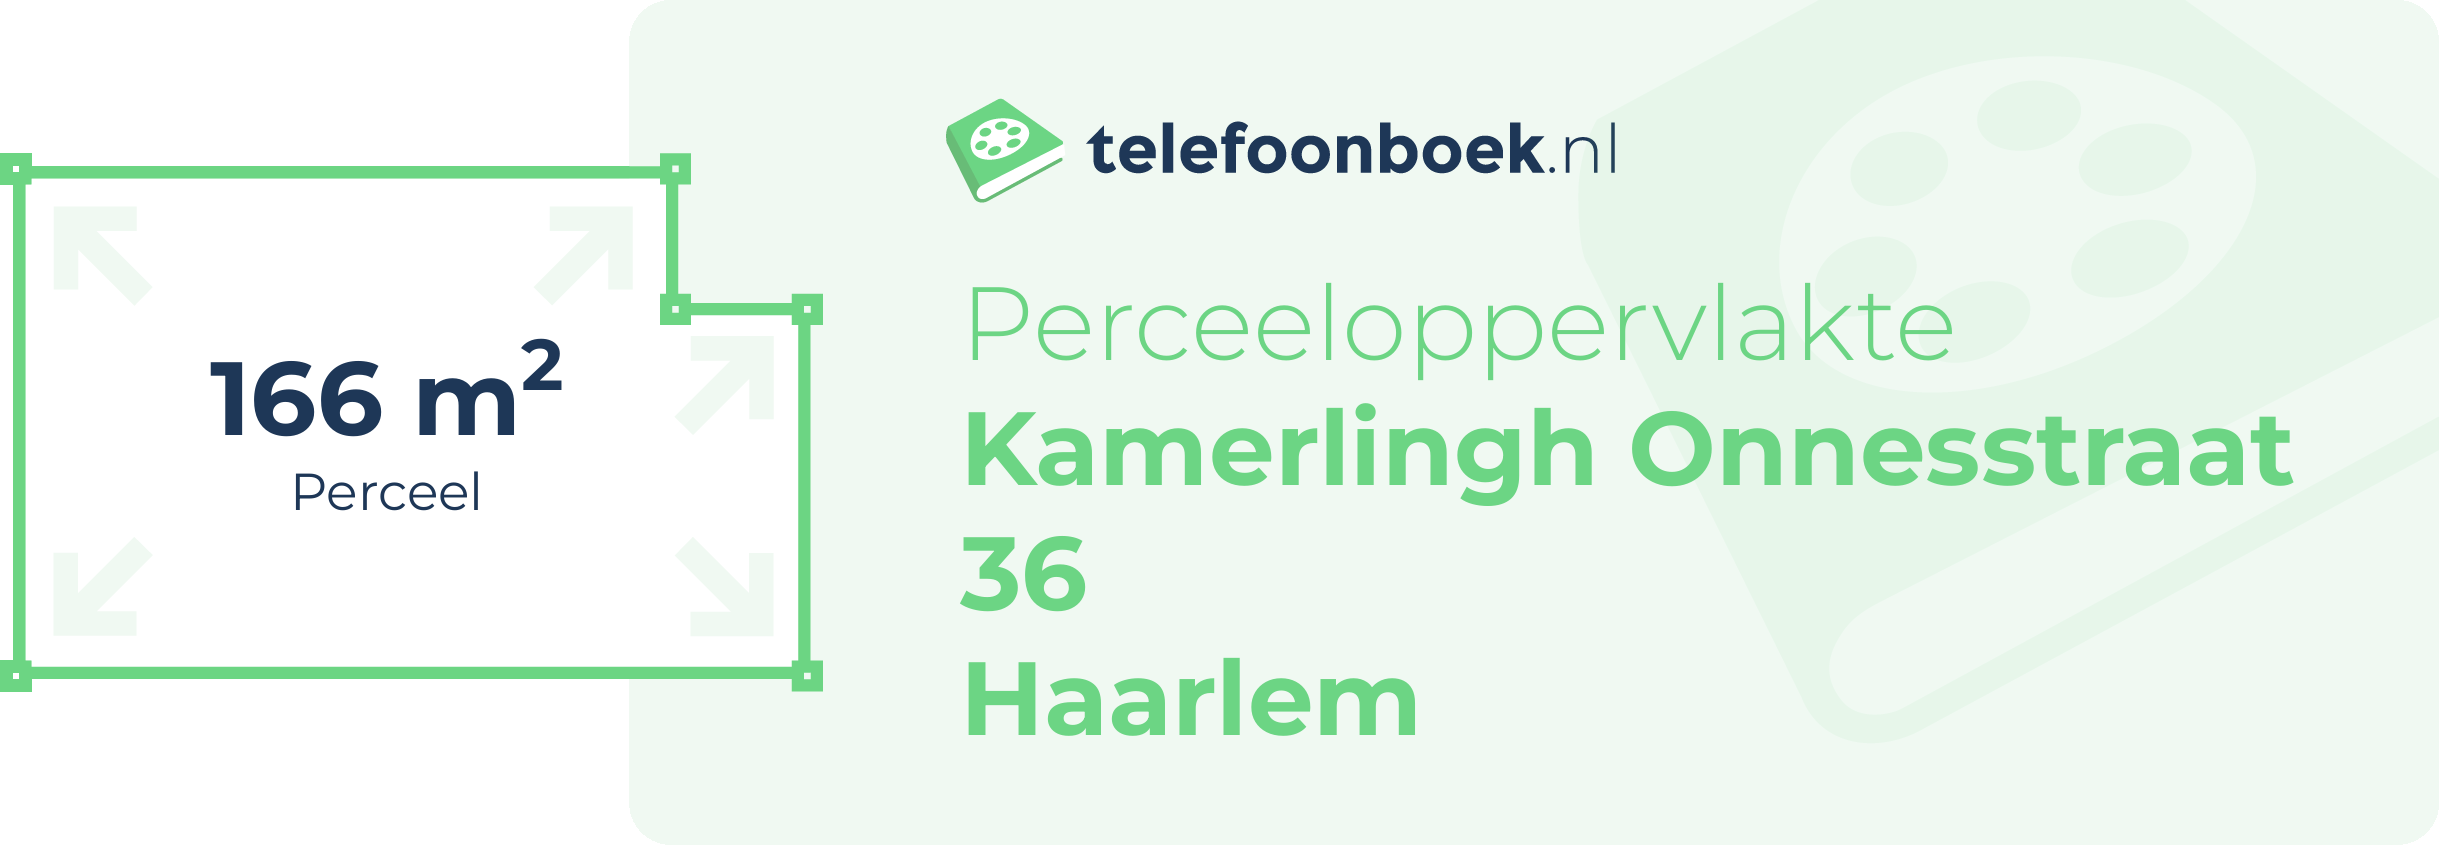 Perceeloppervlakte Kamerlingh Onnesstraat 36 Haarlem